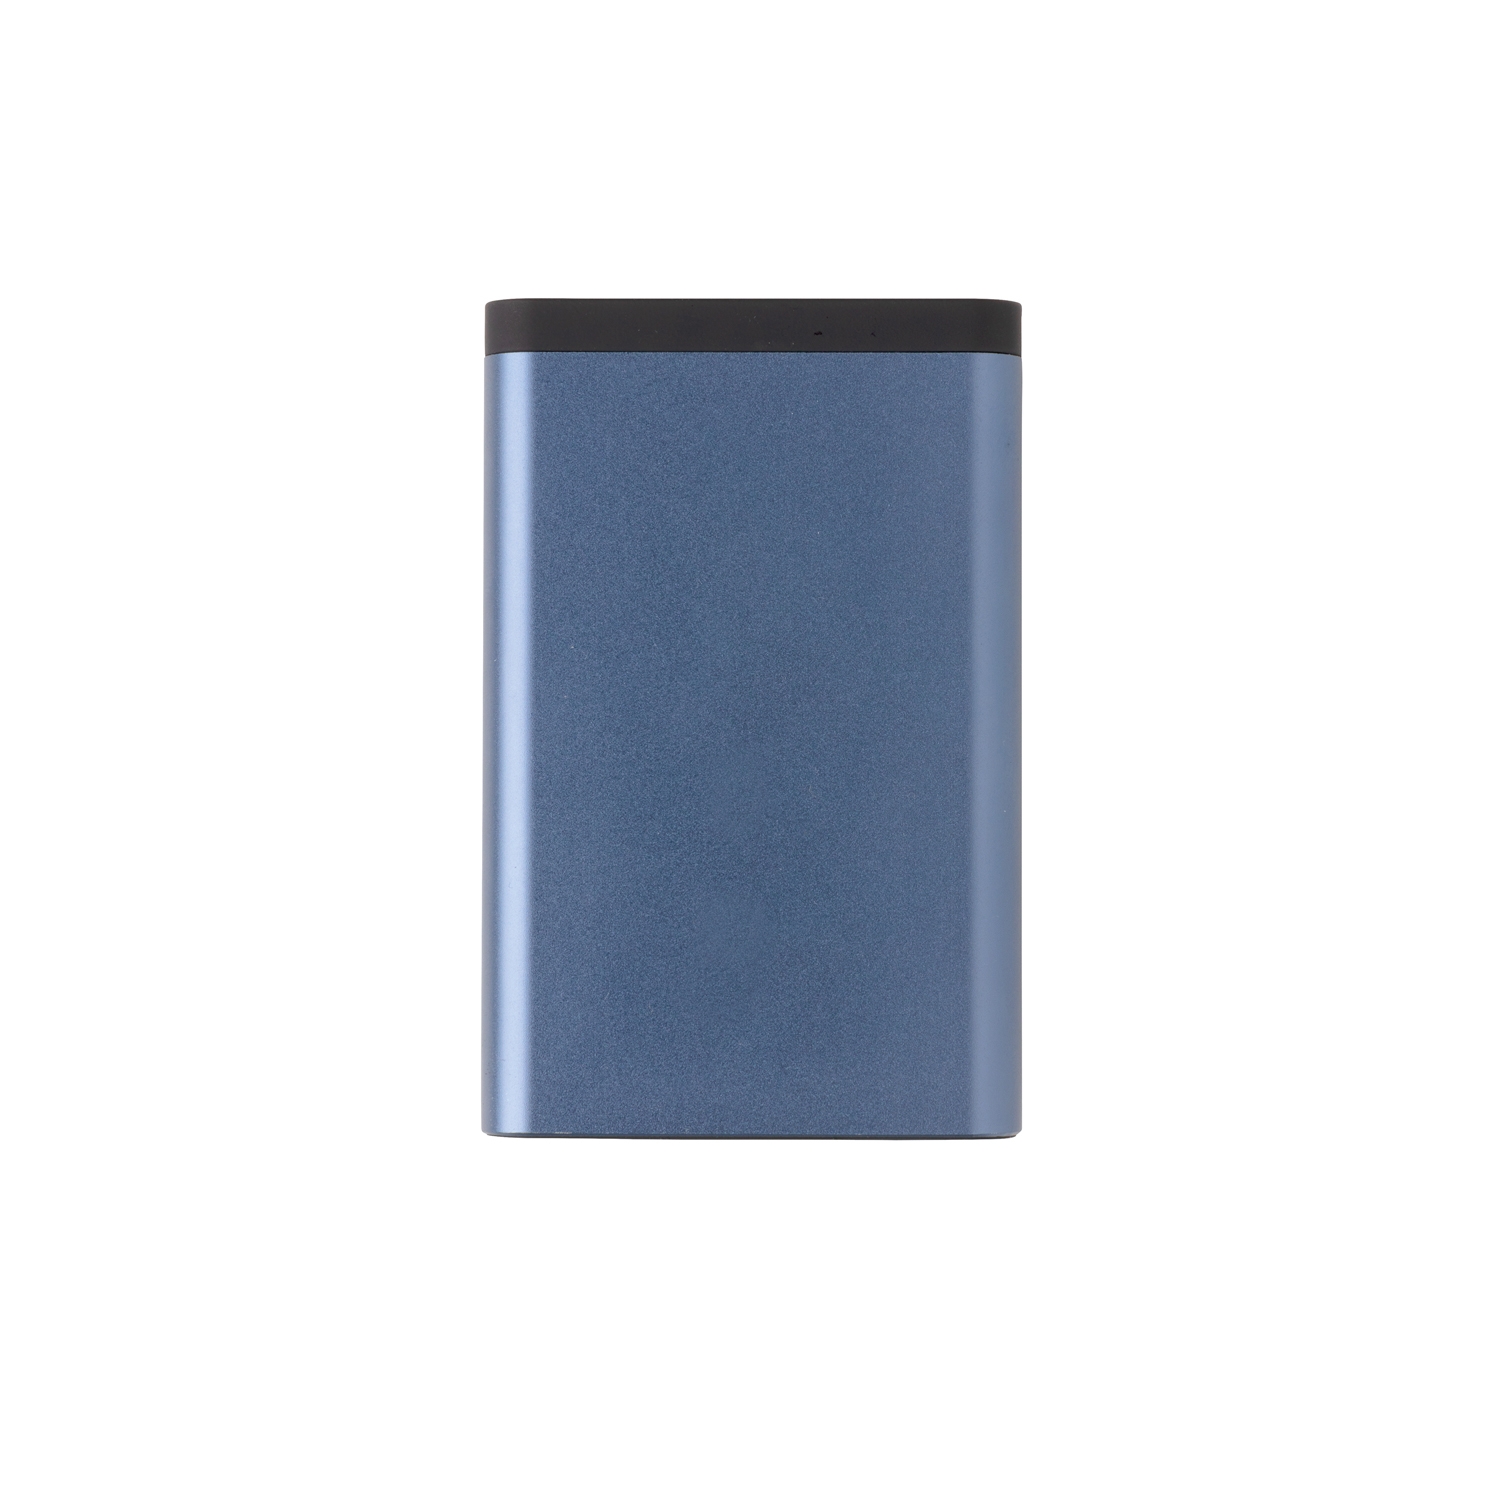 Карманный внешний аккумулятор в алюминиевом корпусе на 10000 мАч, синий, алюминий; abs